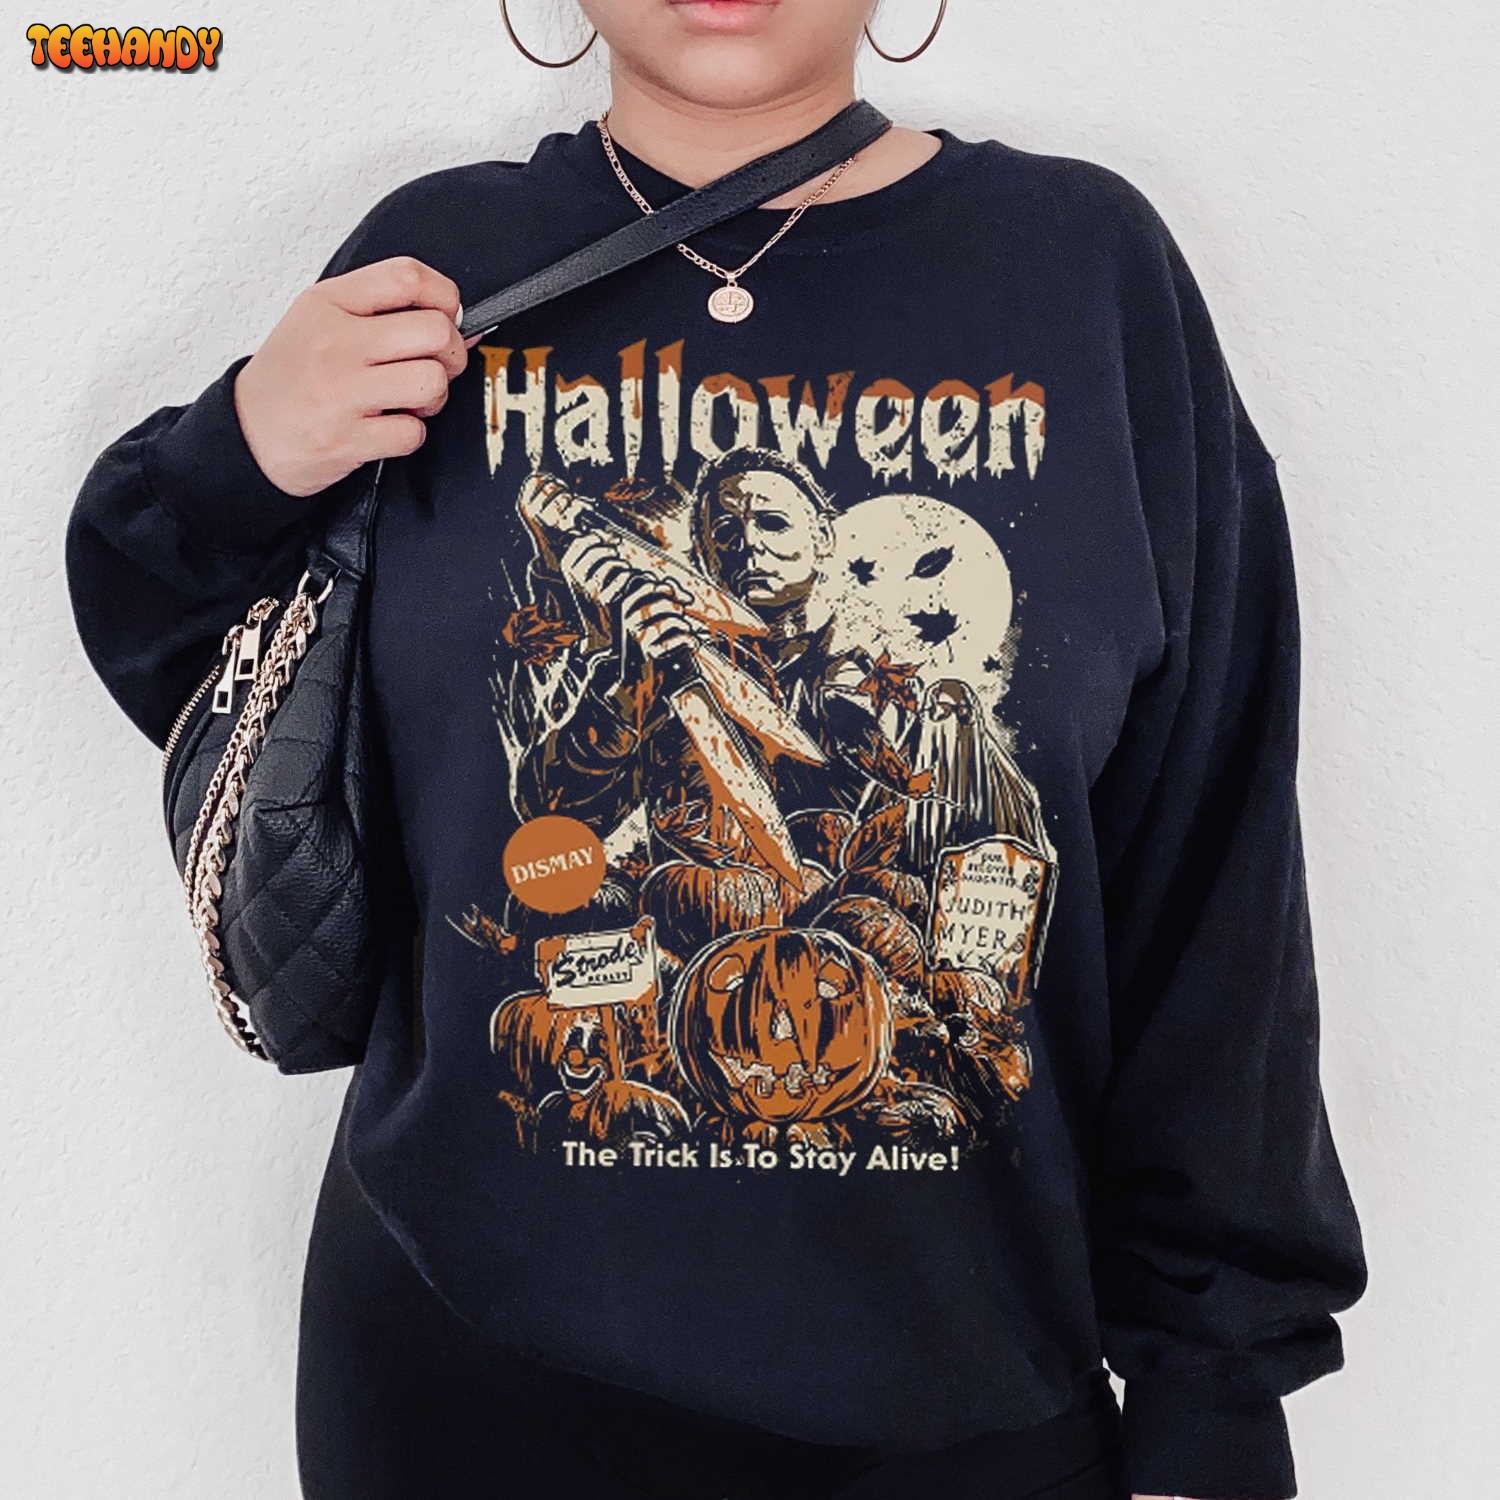 Halloween Horror Movie Crewneck Sweatshirt, Scream Horror Movie Shirt